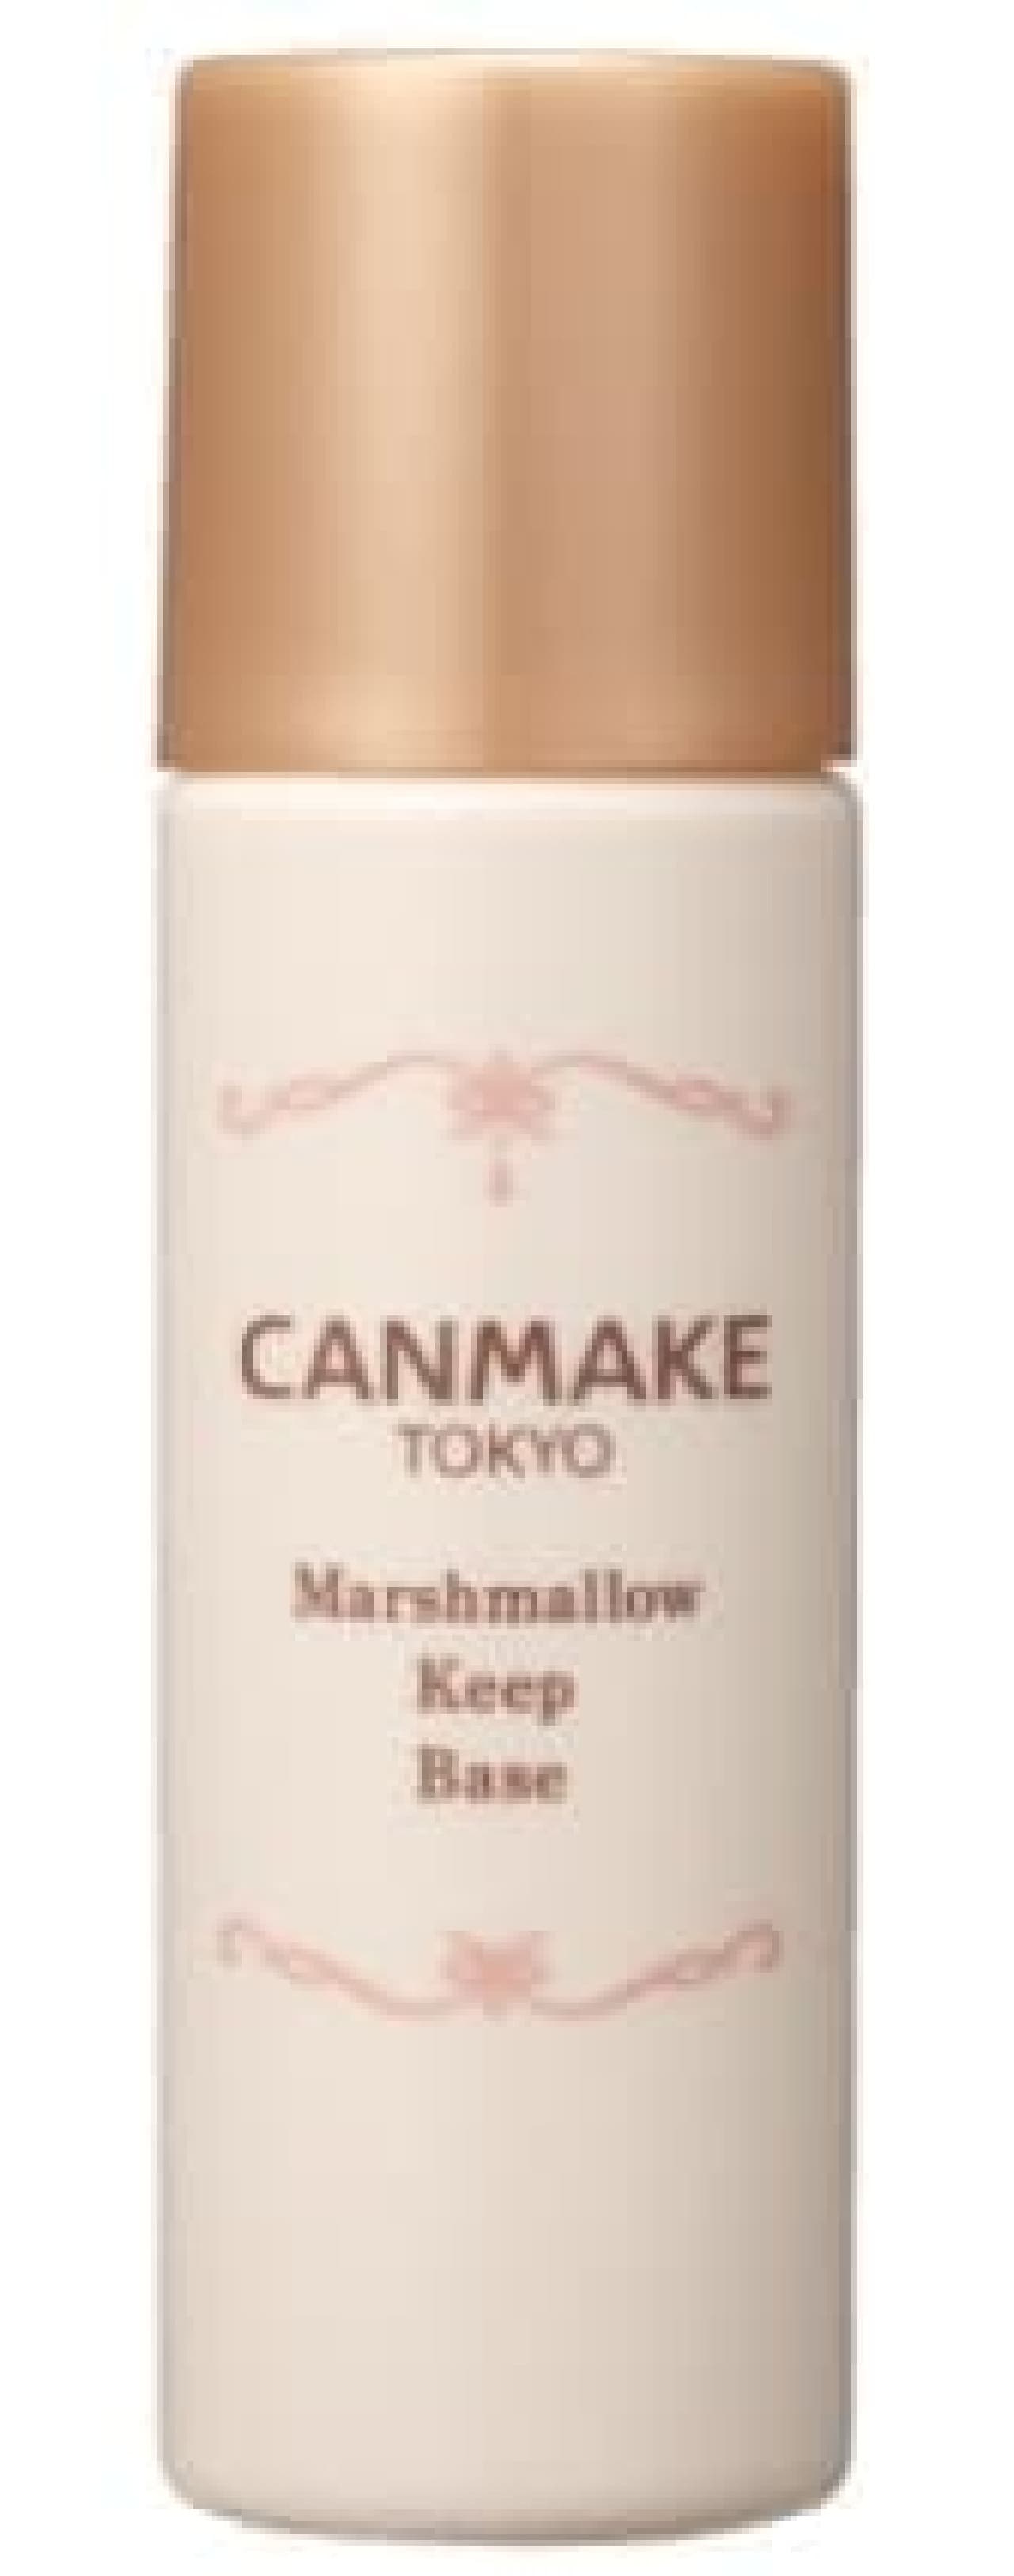 Canmake base "Marshmallow Keep Base"